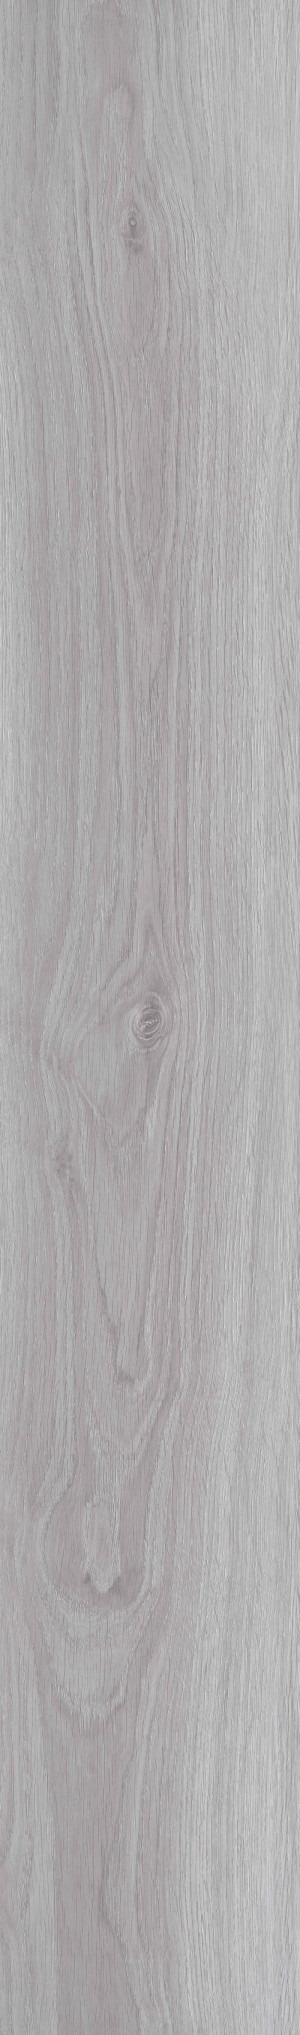 Lumber Oak 0705